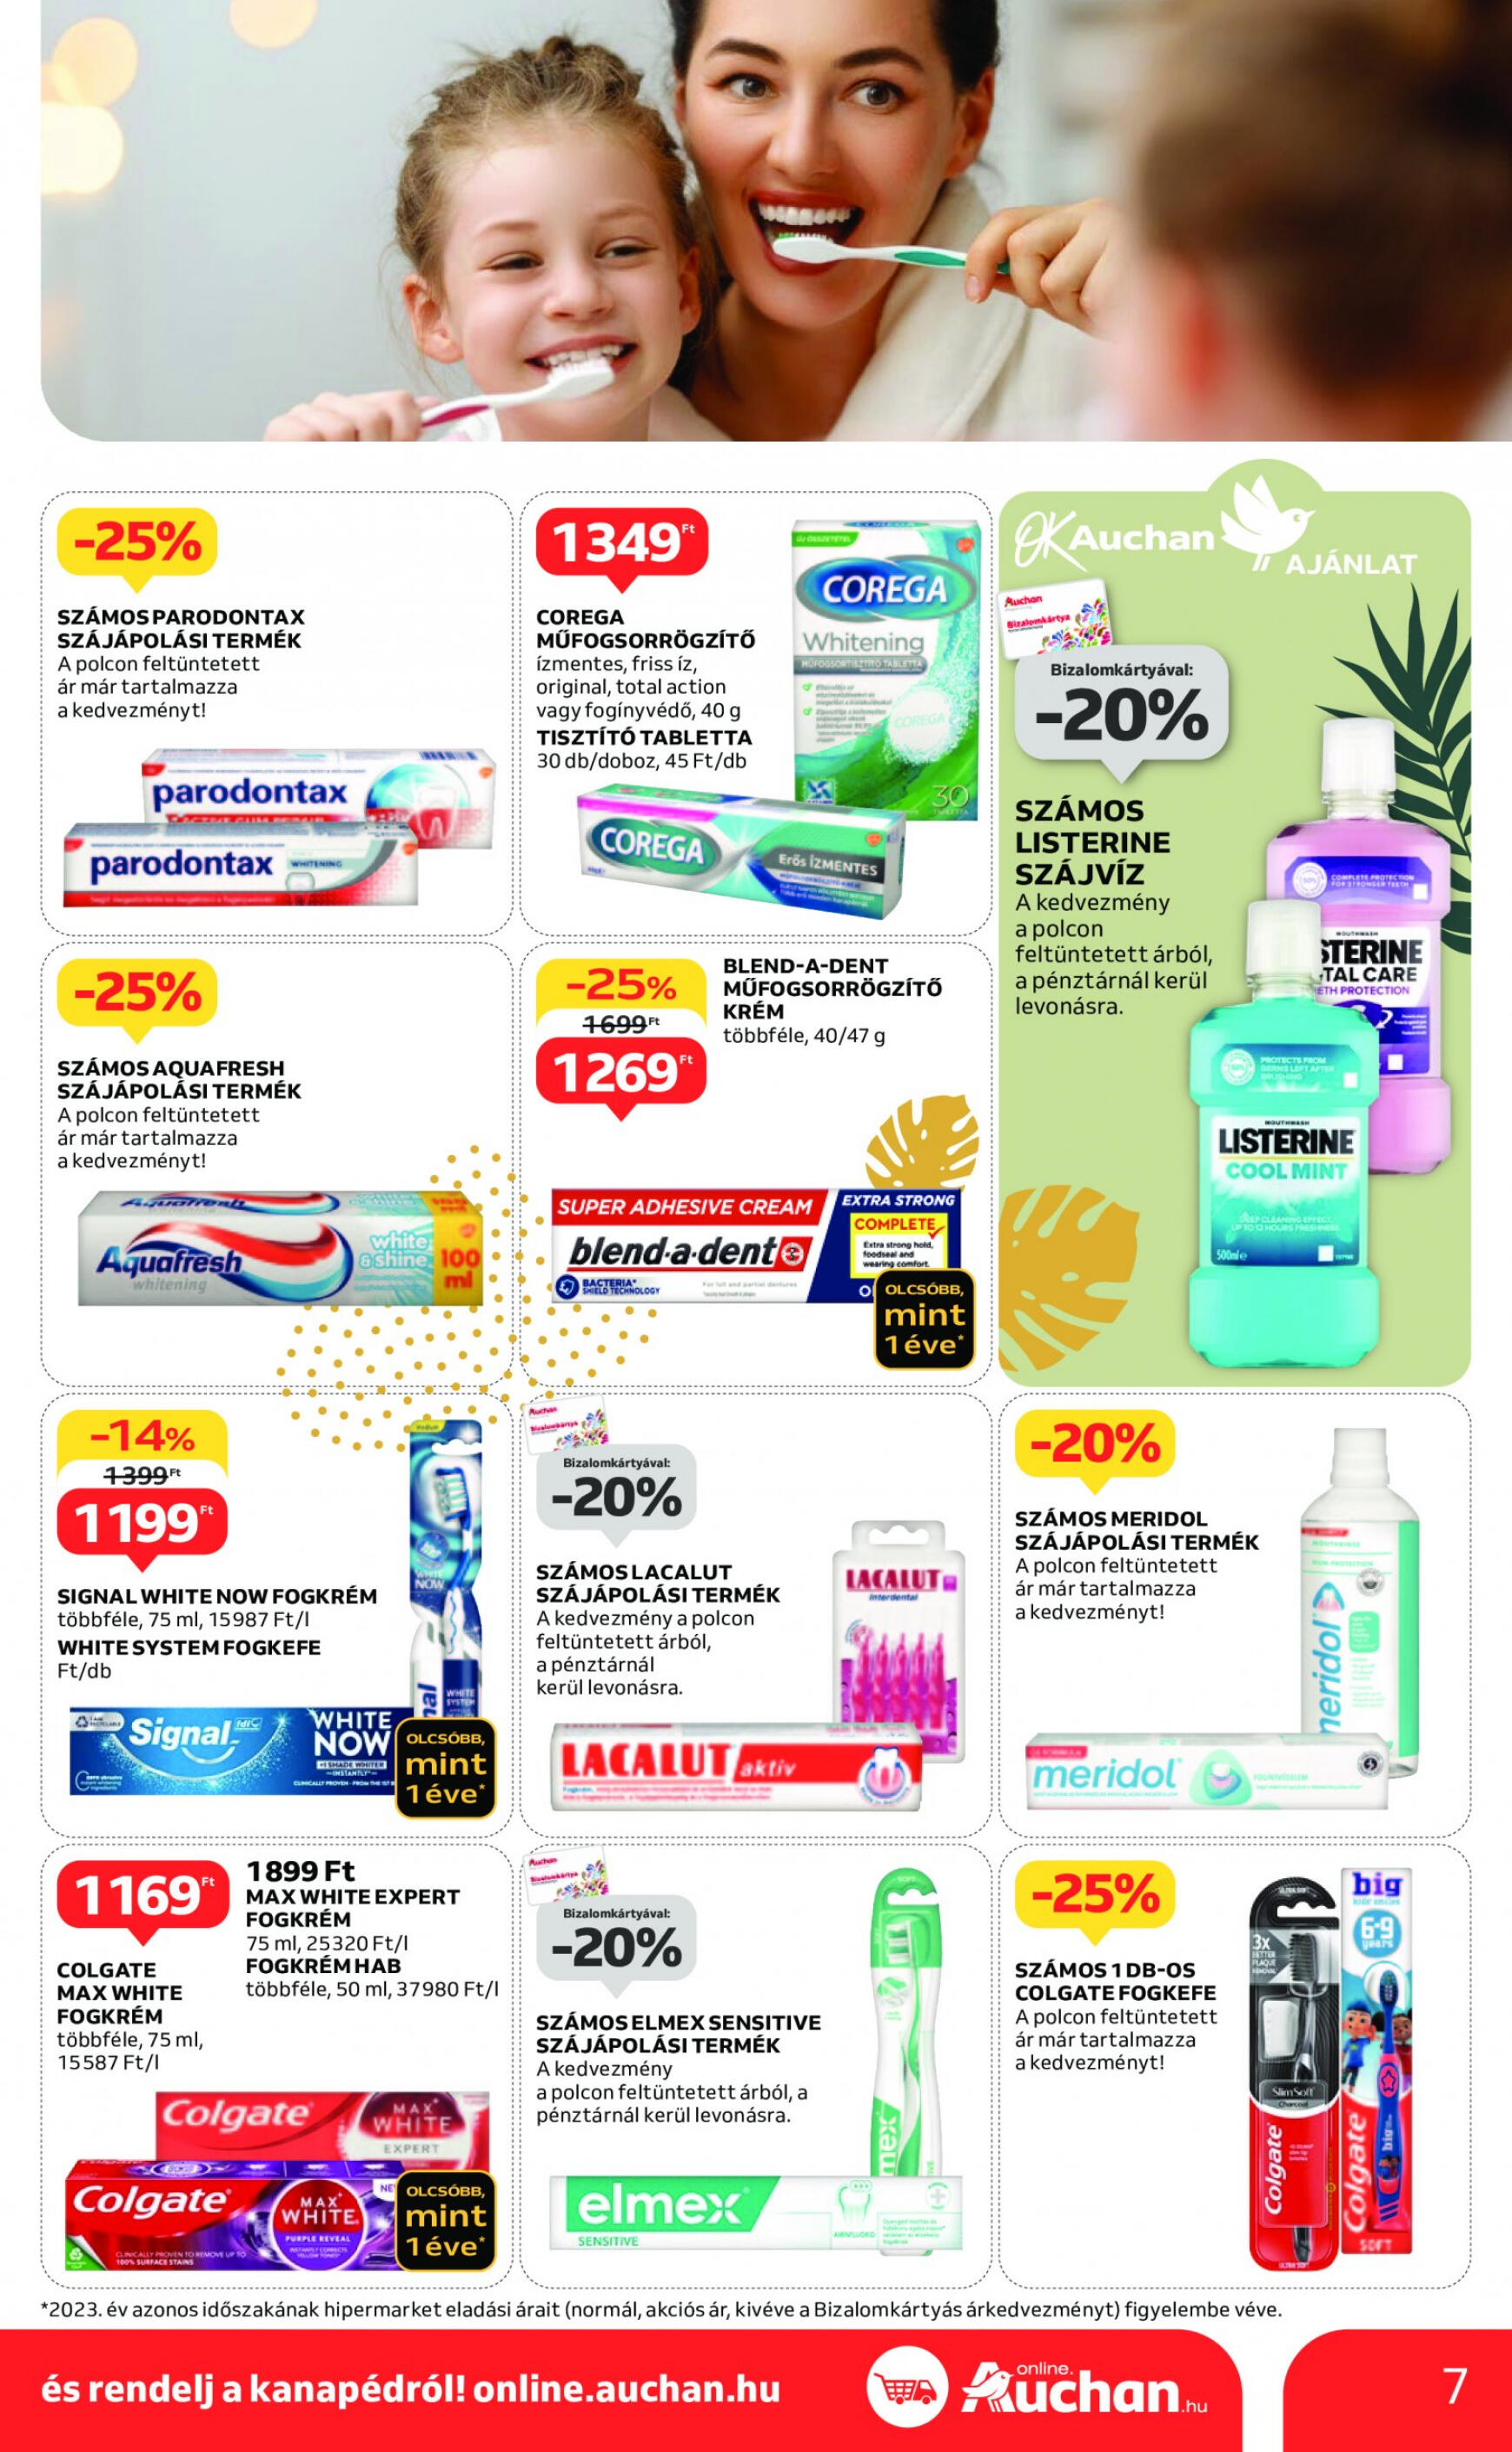 auchan - Aktuális újság Auchan 05.09. - 05.22. - page: 7